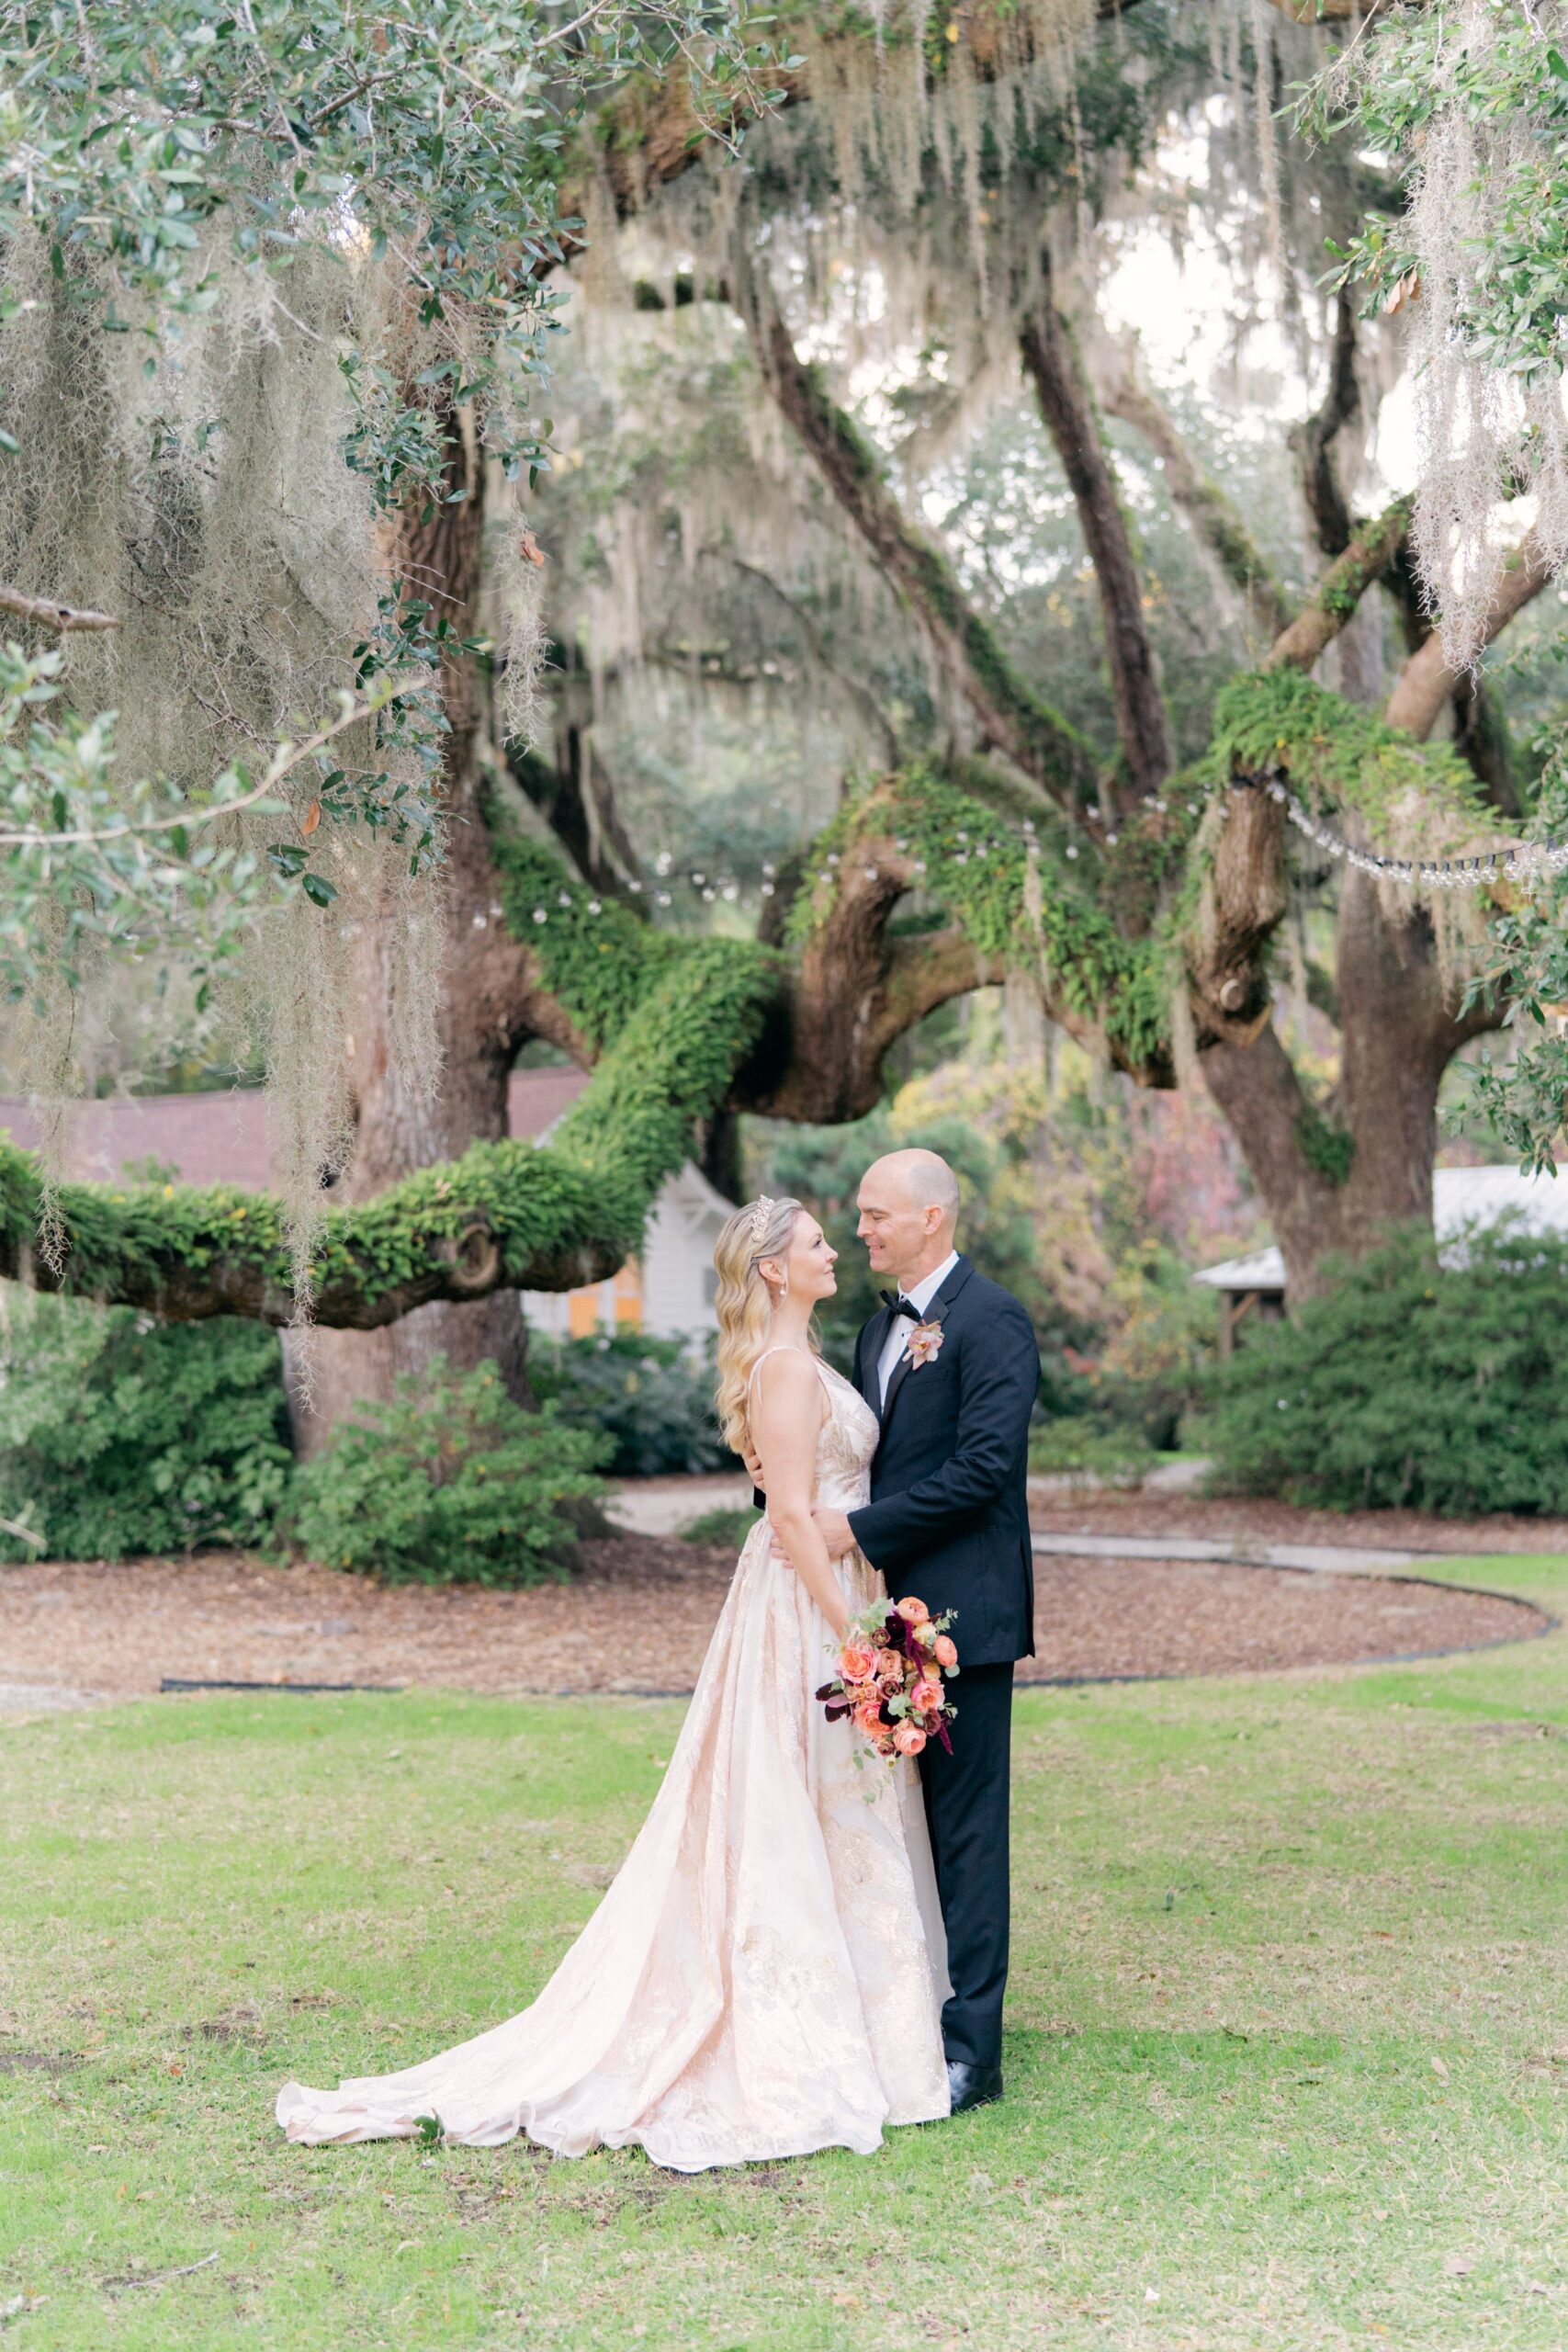 metallic pink wedding dress. groom in black tux. spanish moss and mossy live oak trees